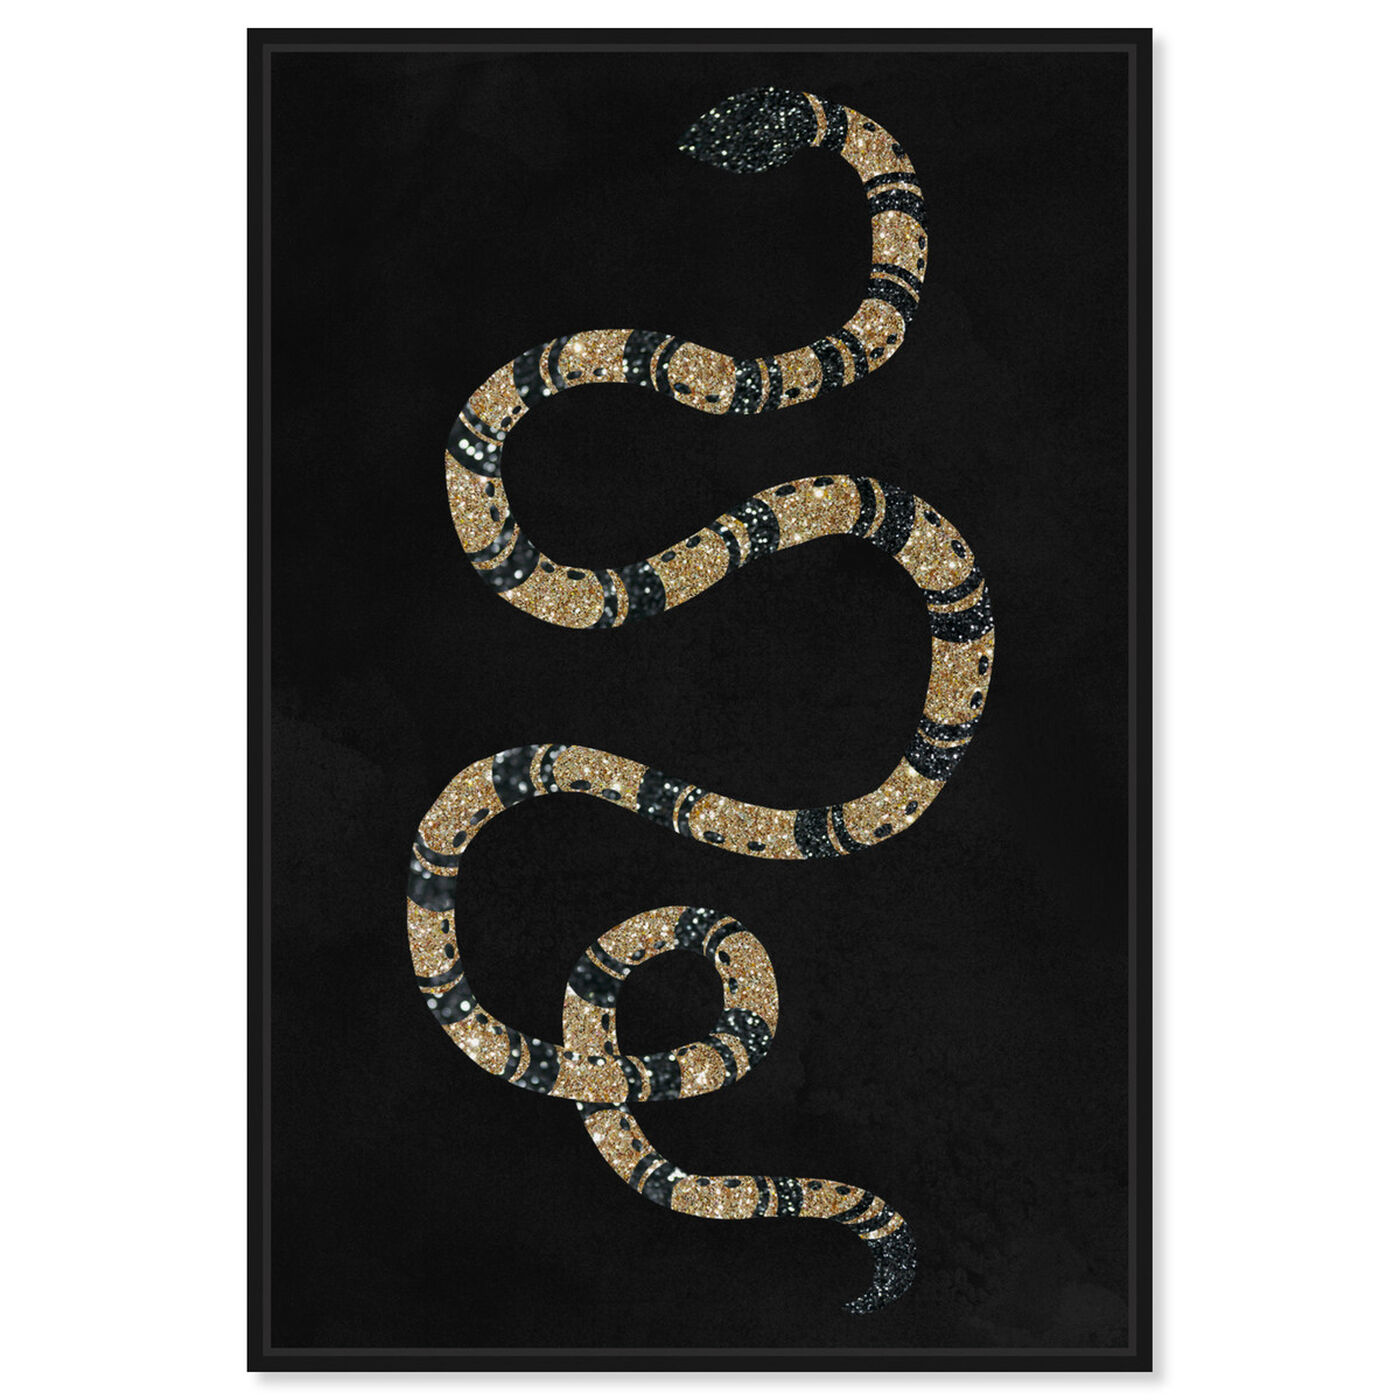 Ebony Snake | Animals Wall Art by Oliver Gal